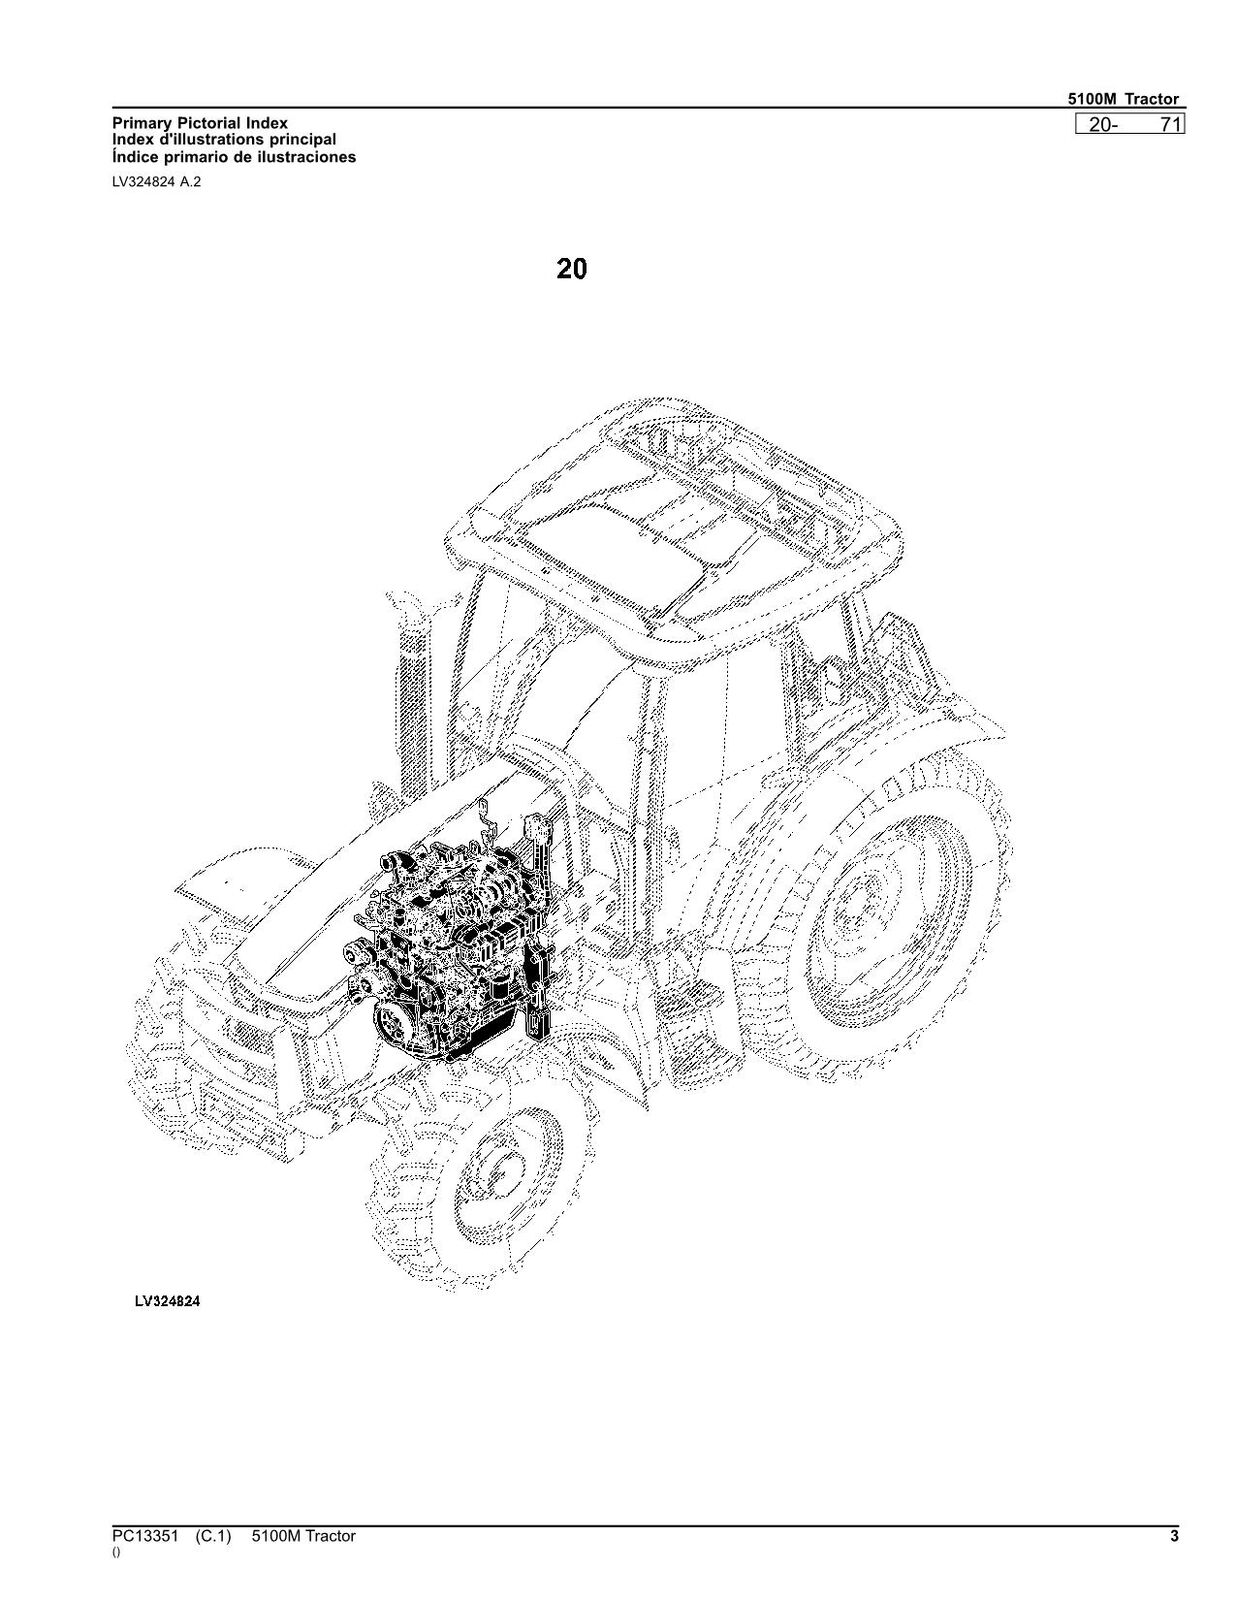 John Deere 5100m Tractor Parts Catalog Manual 2 Profmanual 9913